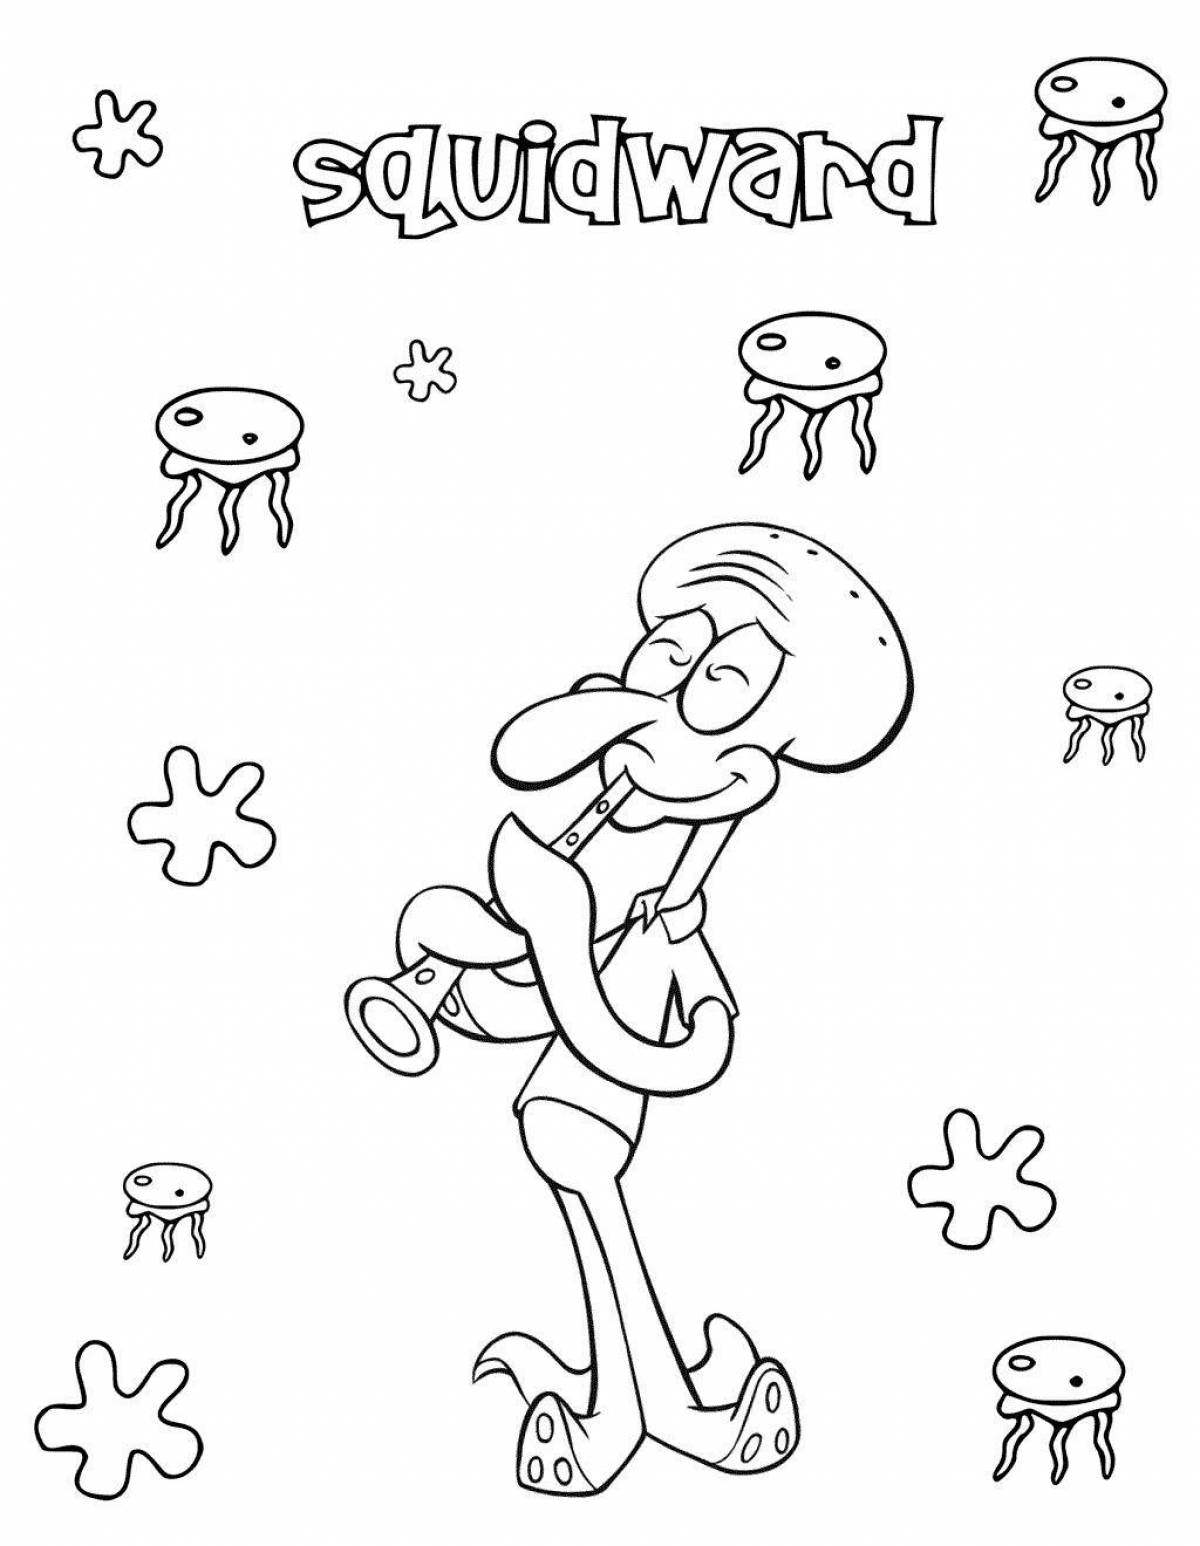 Squidward spongebob fun coloring book